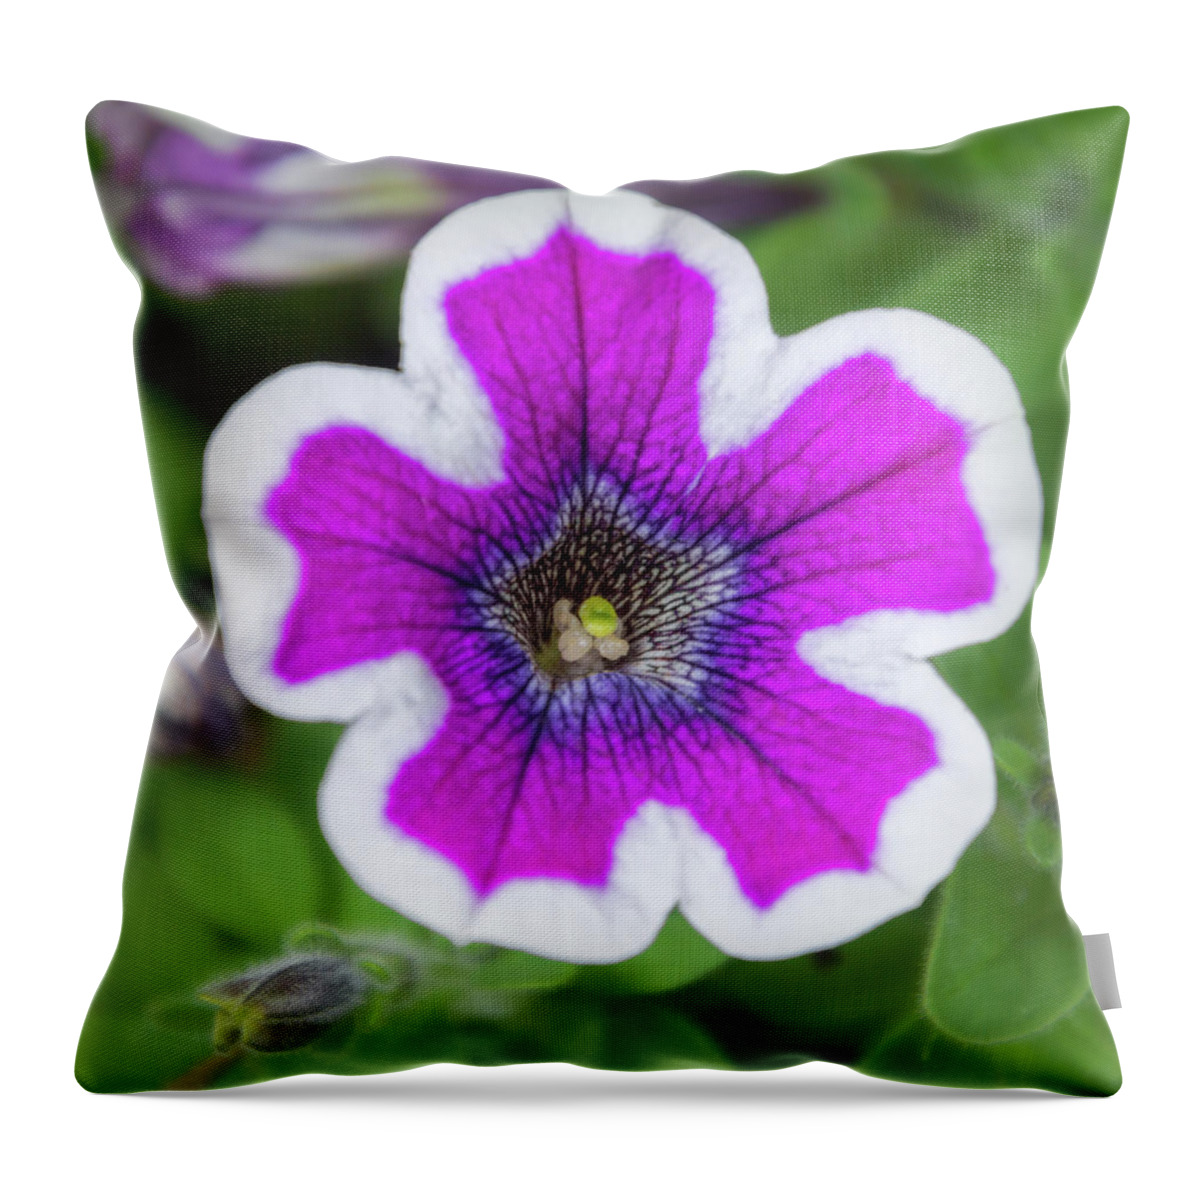 Debra Martz Throw Pillow featuring the photograph Beauty of A Garden Petunia by Debra Martz